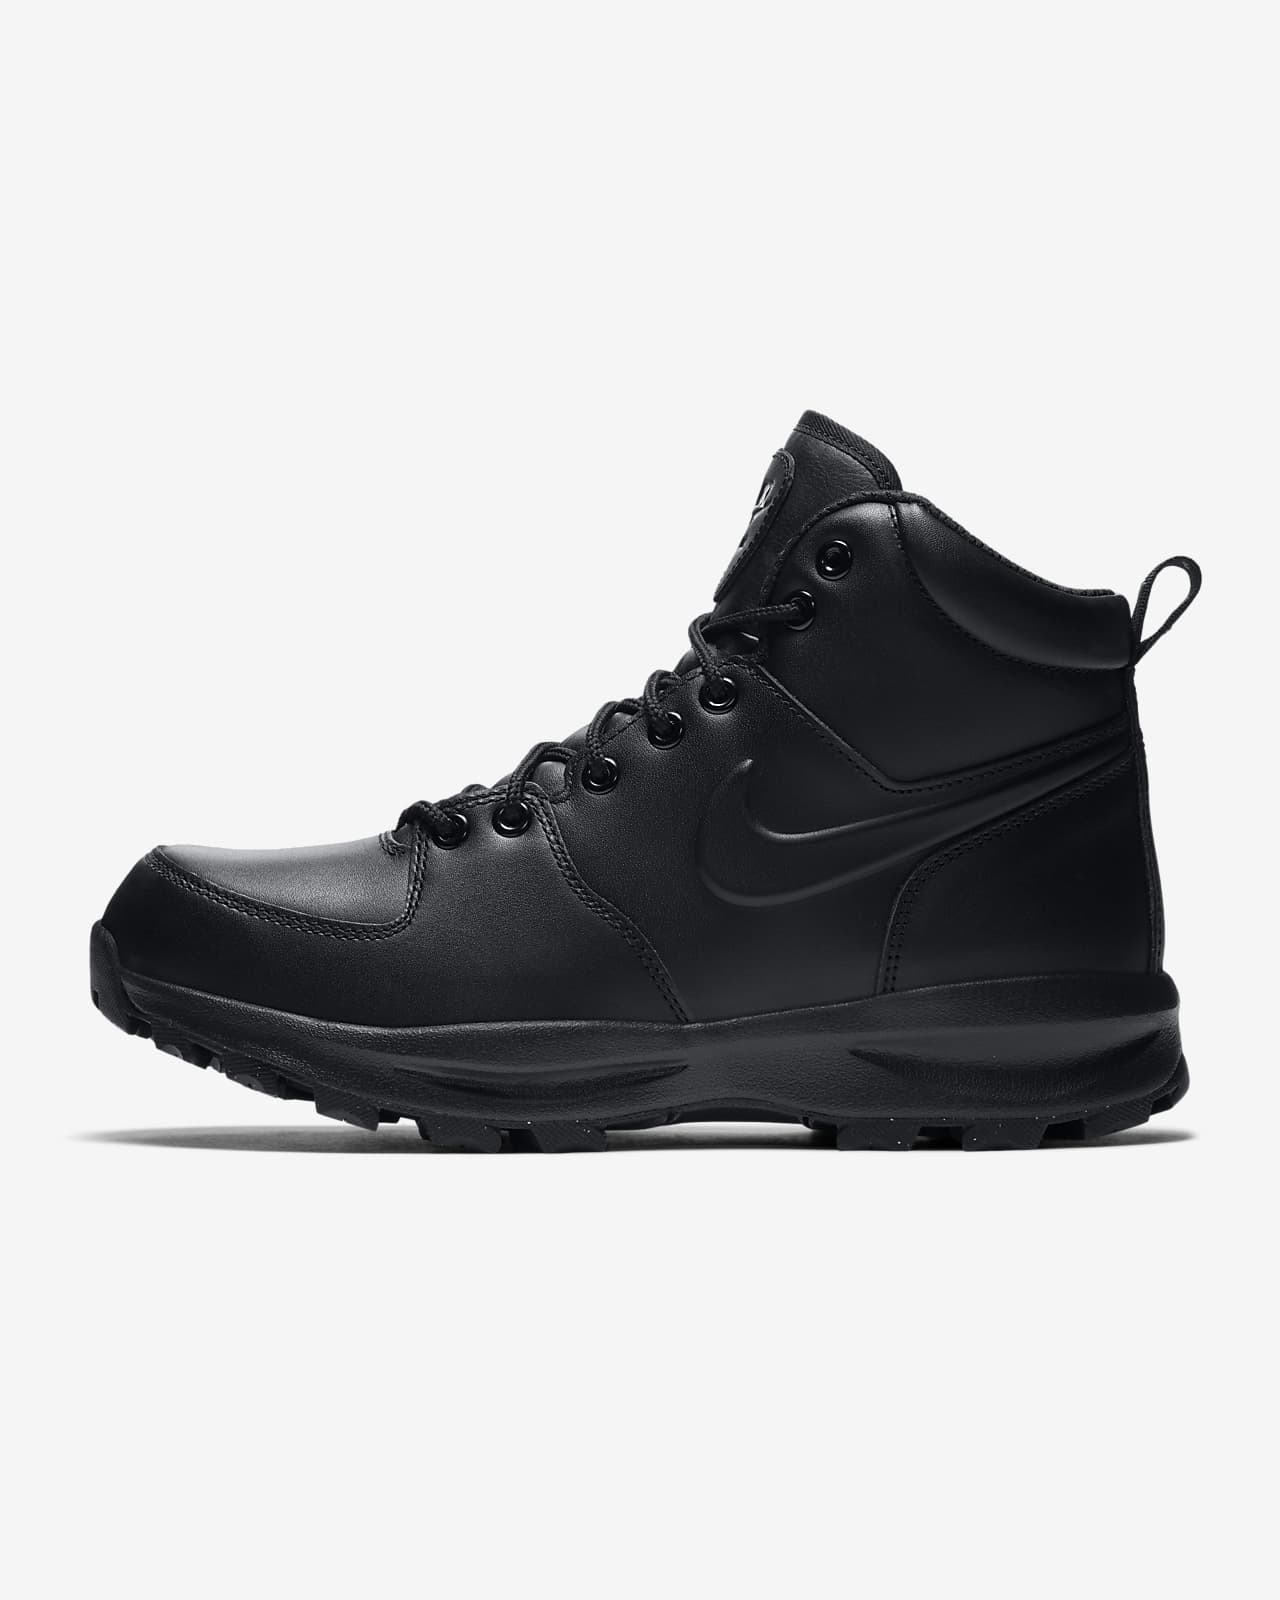 Nike Manoa Leather Men's Boot. Nike NZ